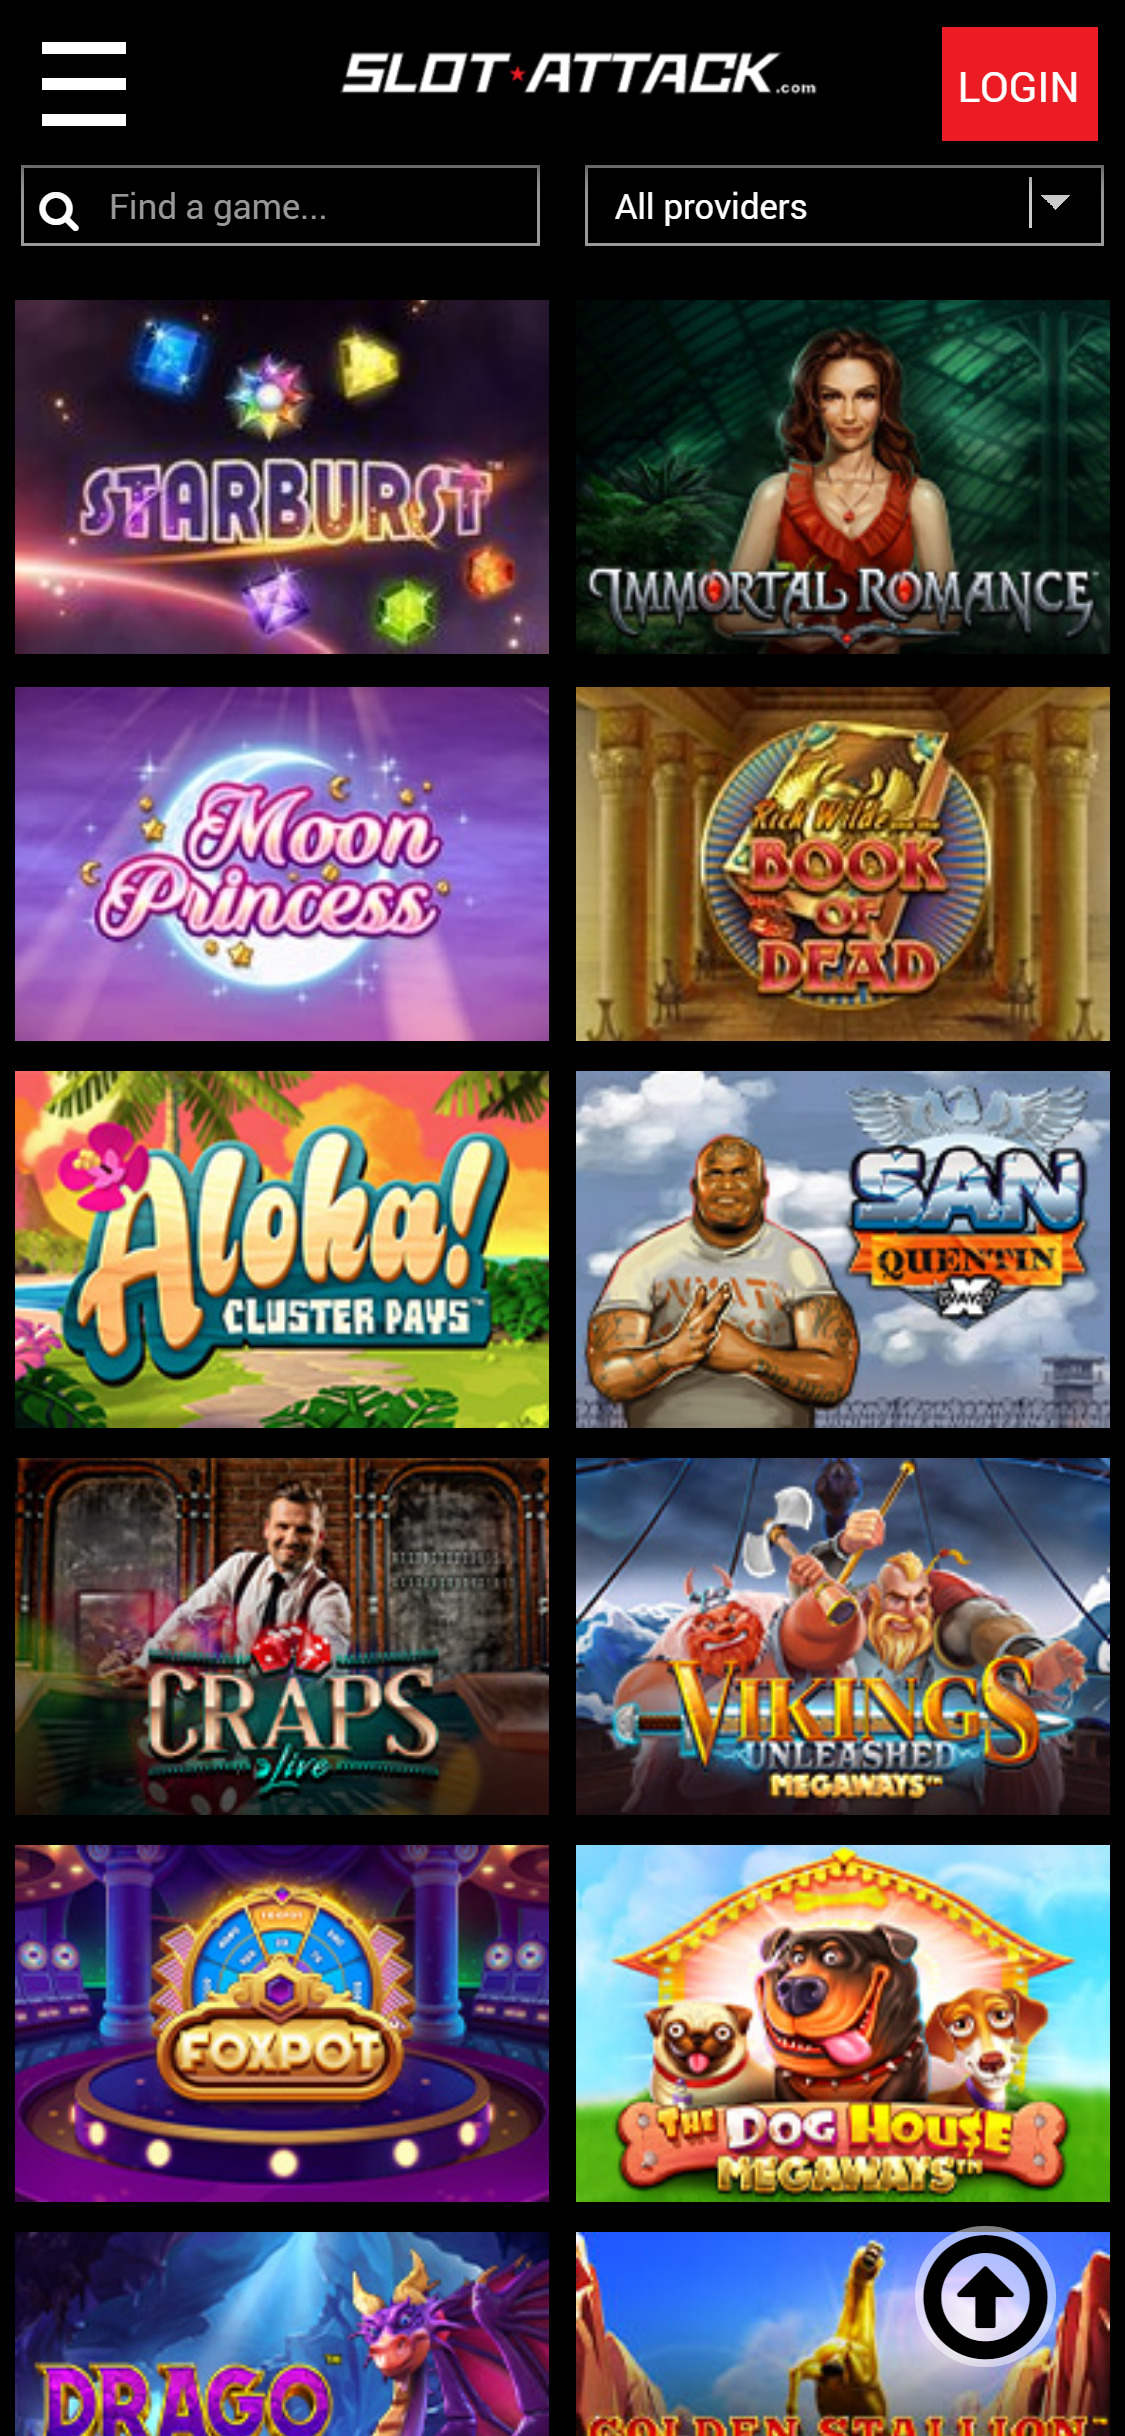 Slot Attack Casino Mobile Games Review